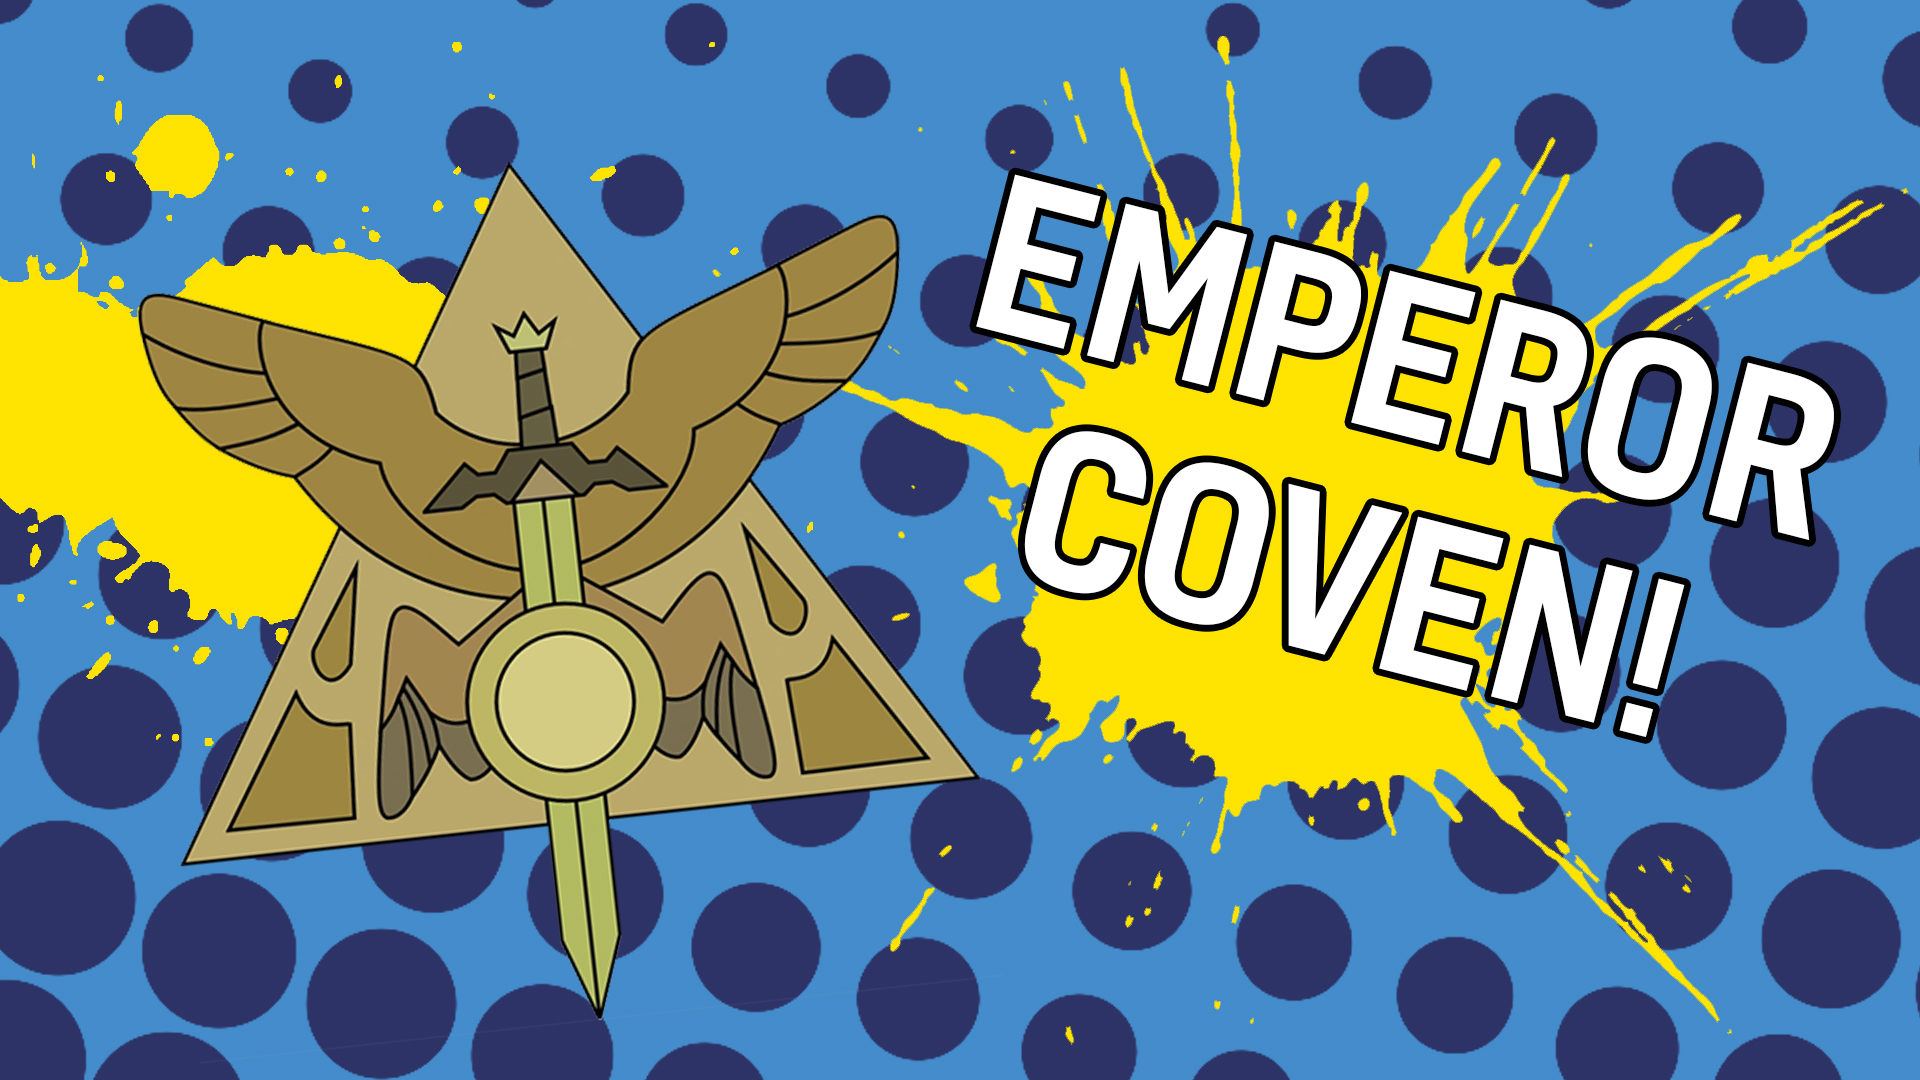 Result: Emperor’s Coven!